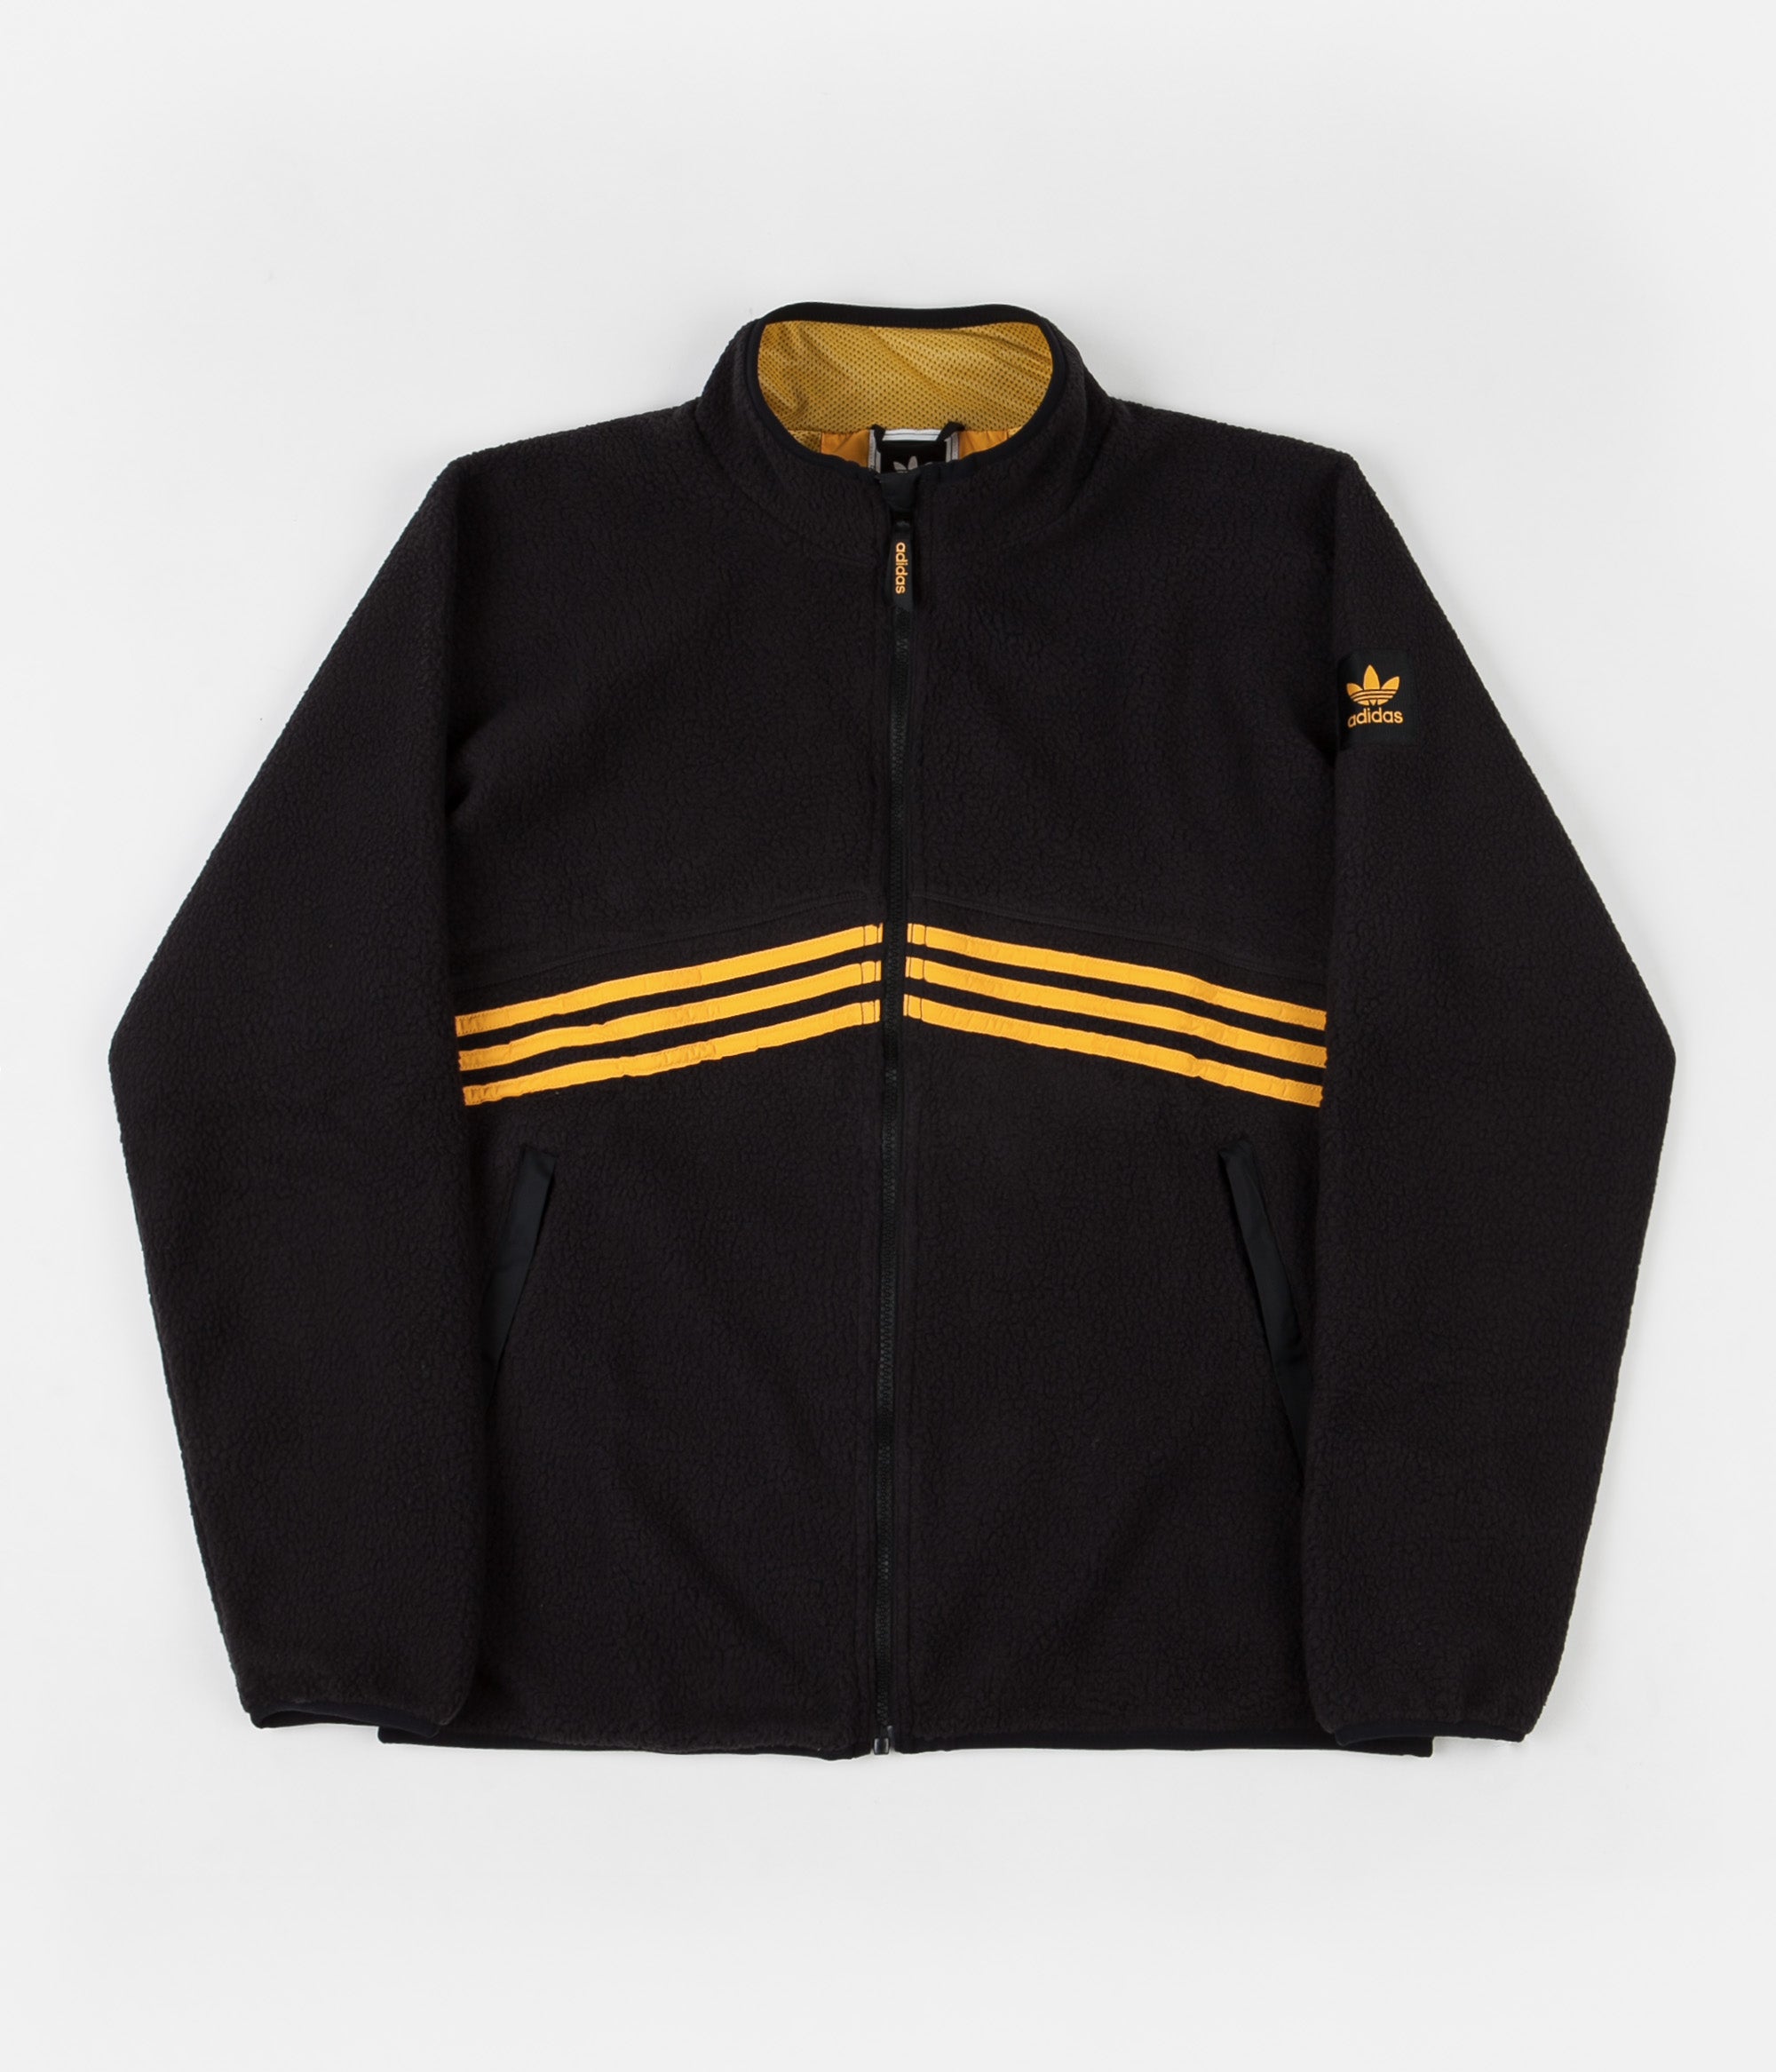 adidas sherpa lined jacket